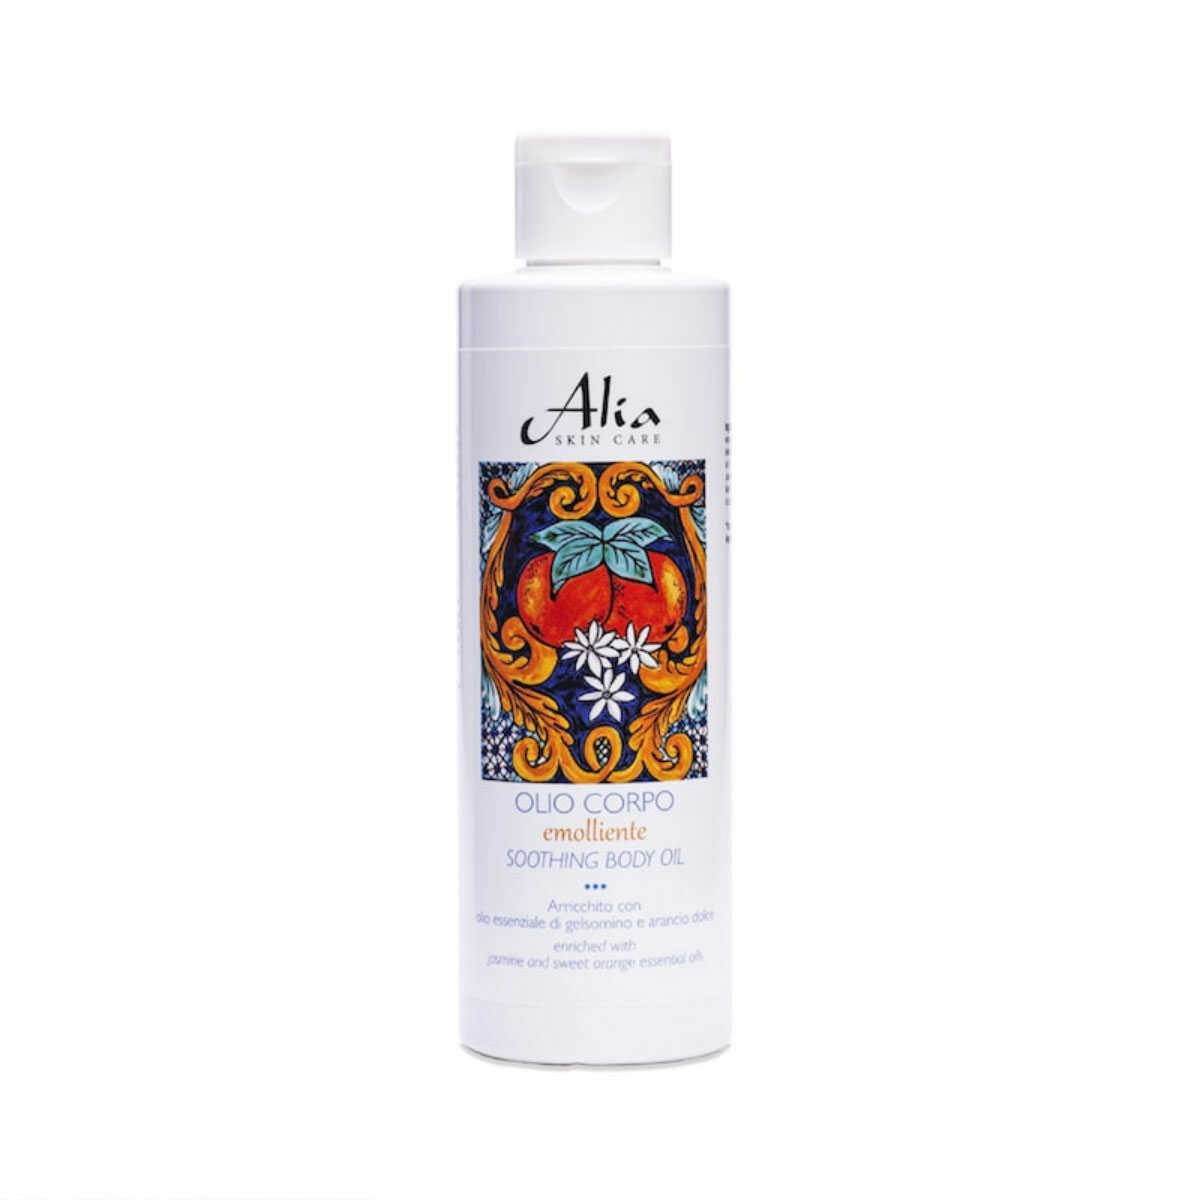 Alia Skin Care - Body Oil Verzachtend - Jasmijn/Zoete Sinaasappel 200ml